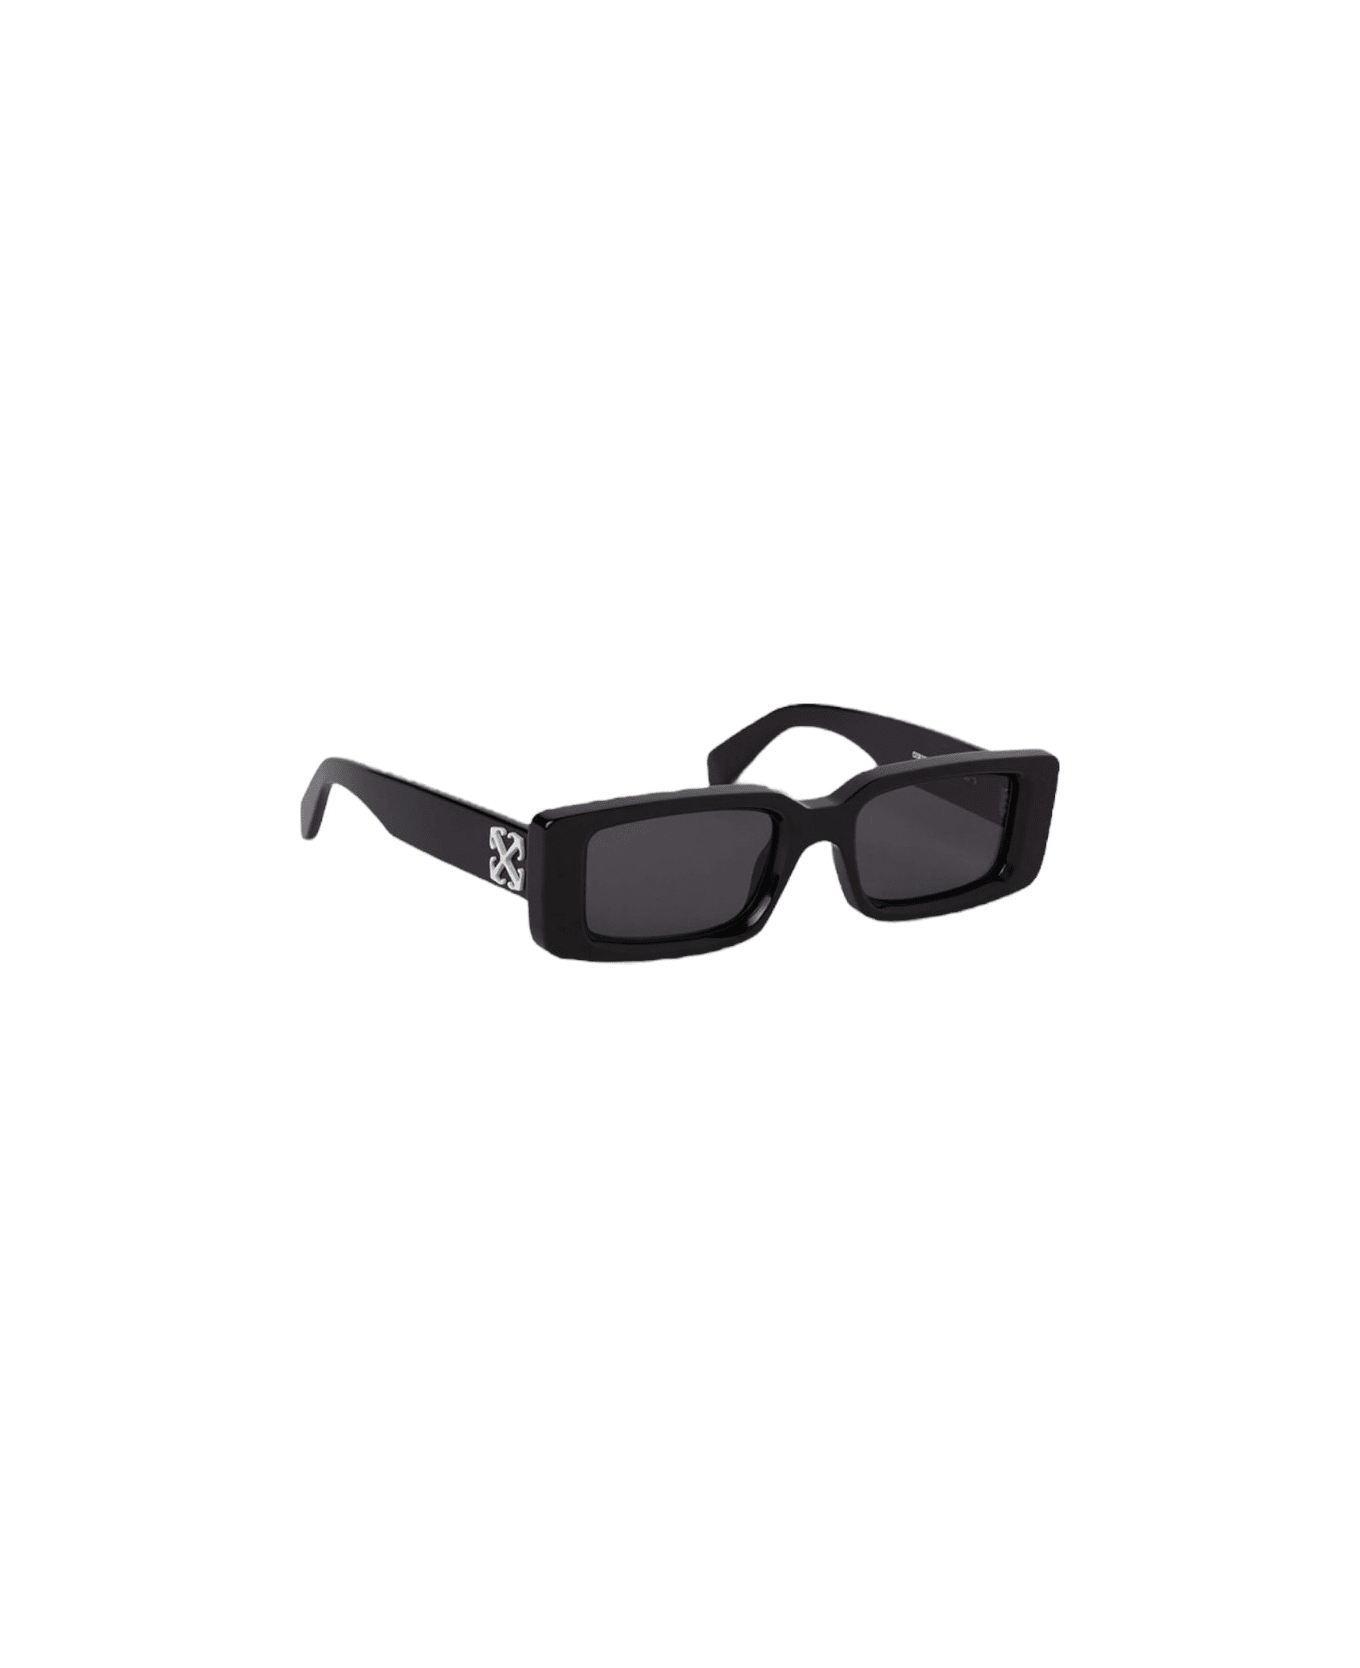 Off-White Arthur - Oeri127 Sunglasses